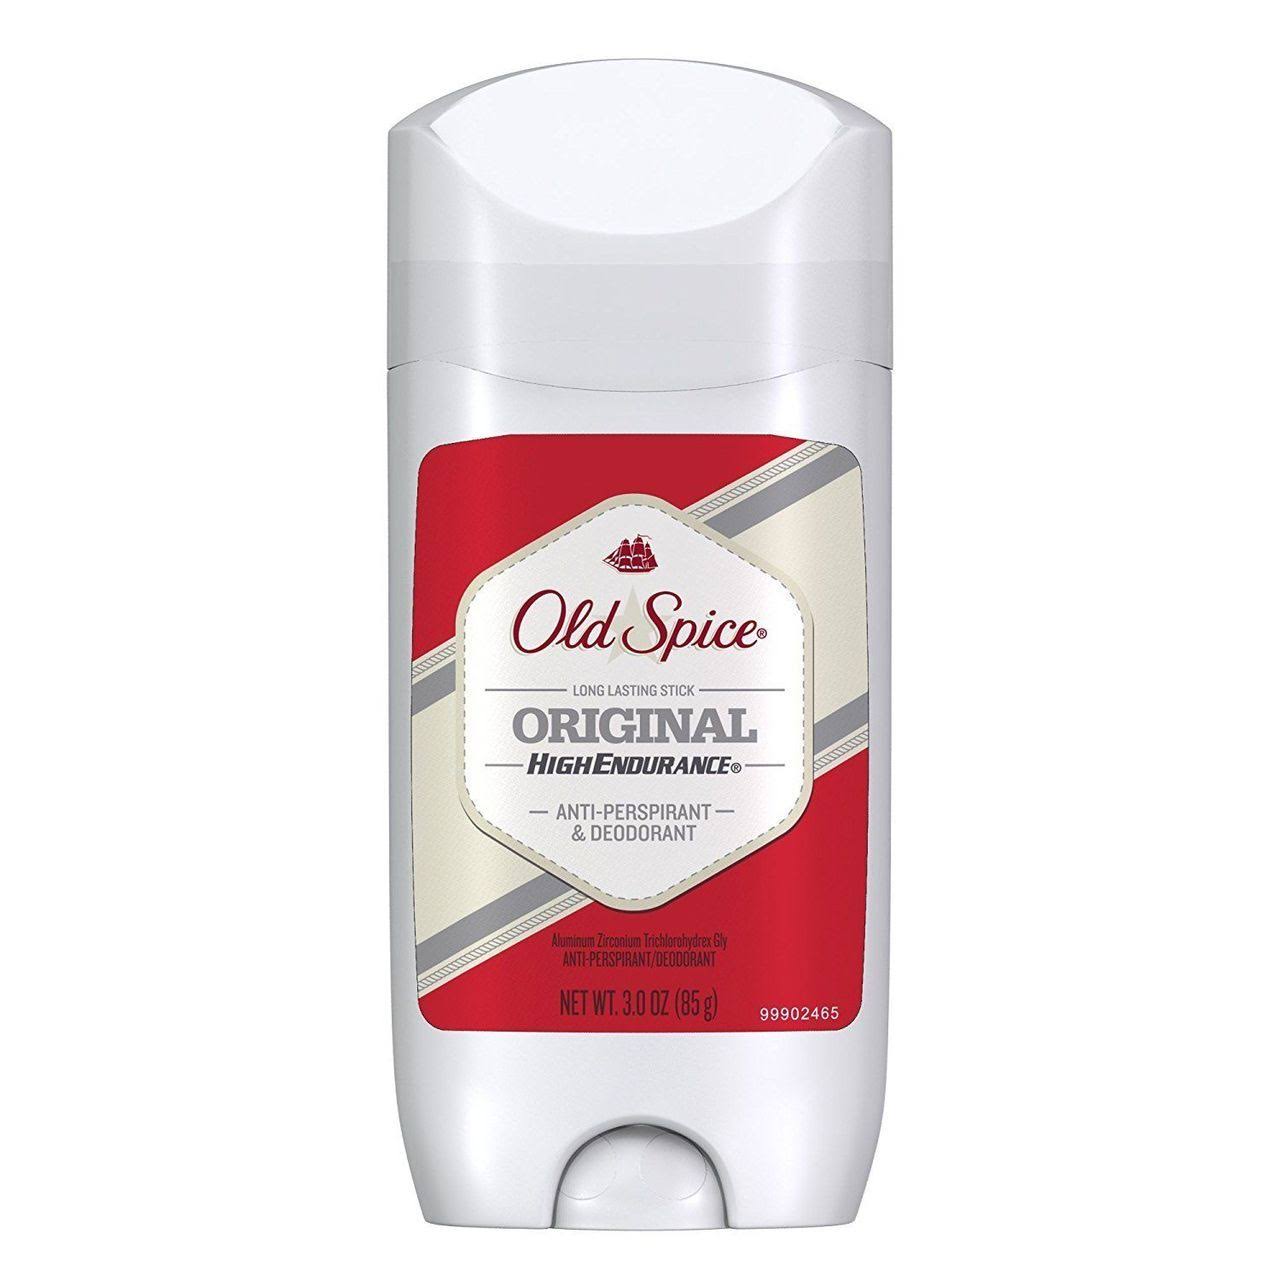 Old Spice Original High Endurance Anti-perspirant & Deodorant